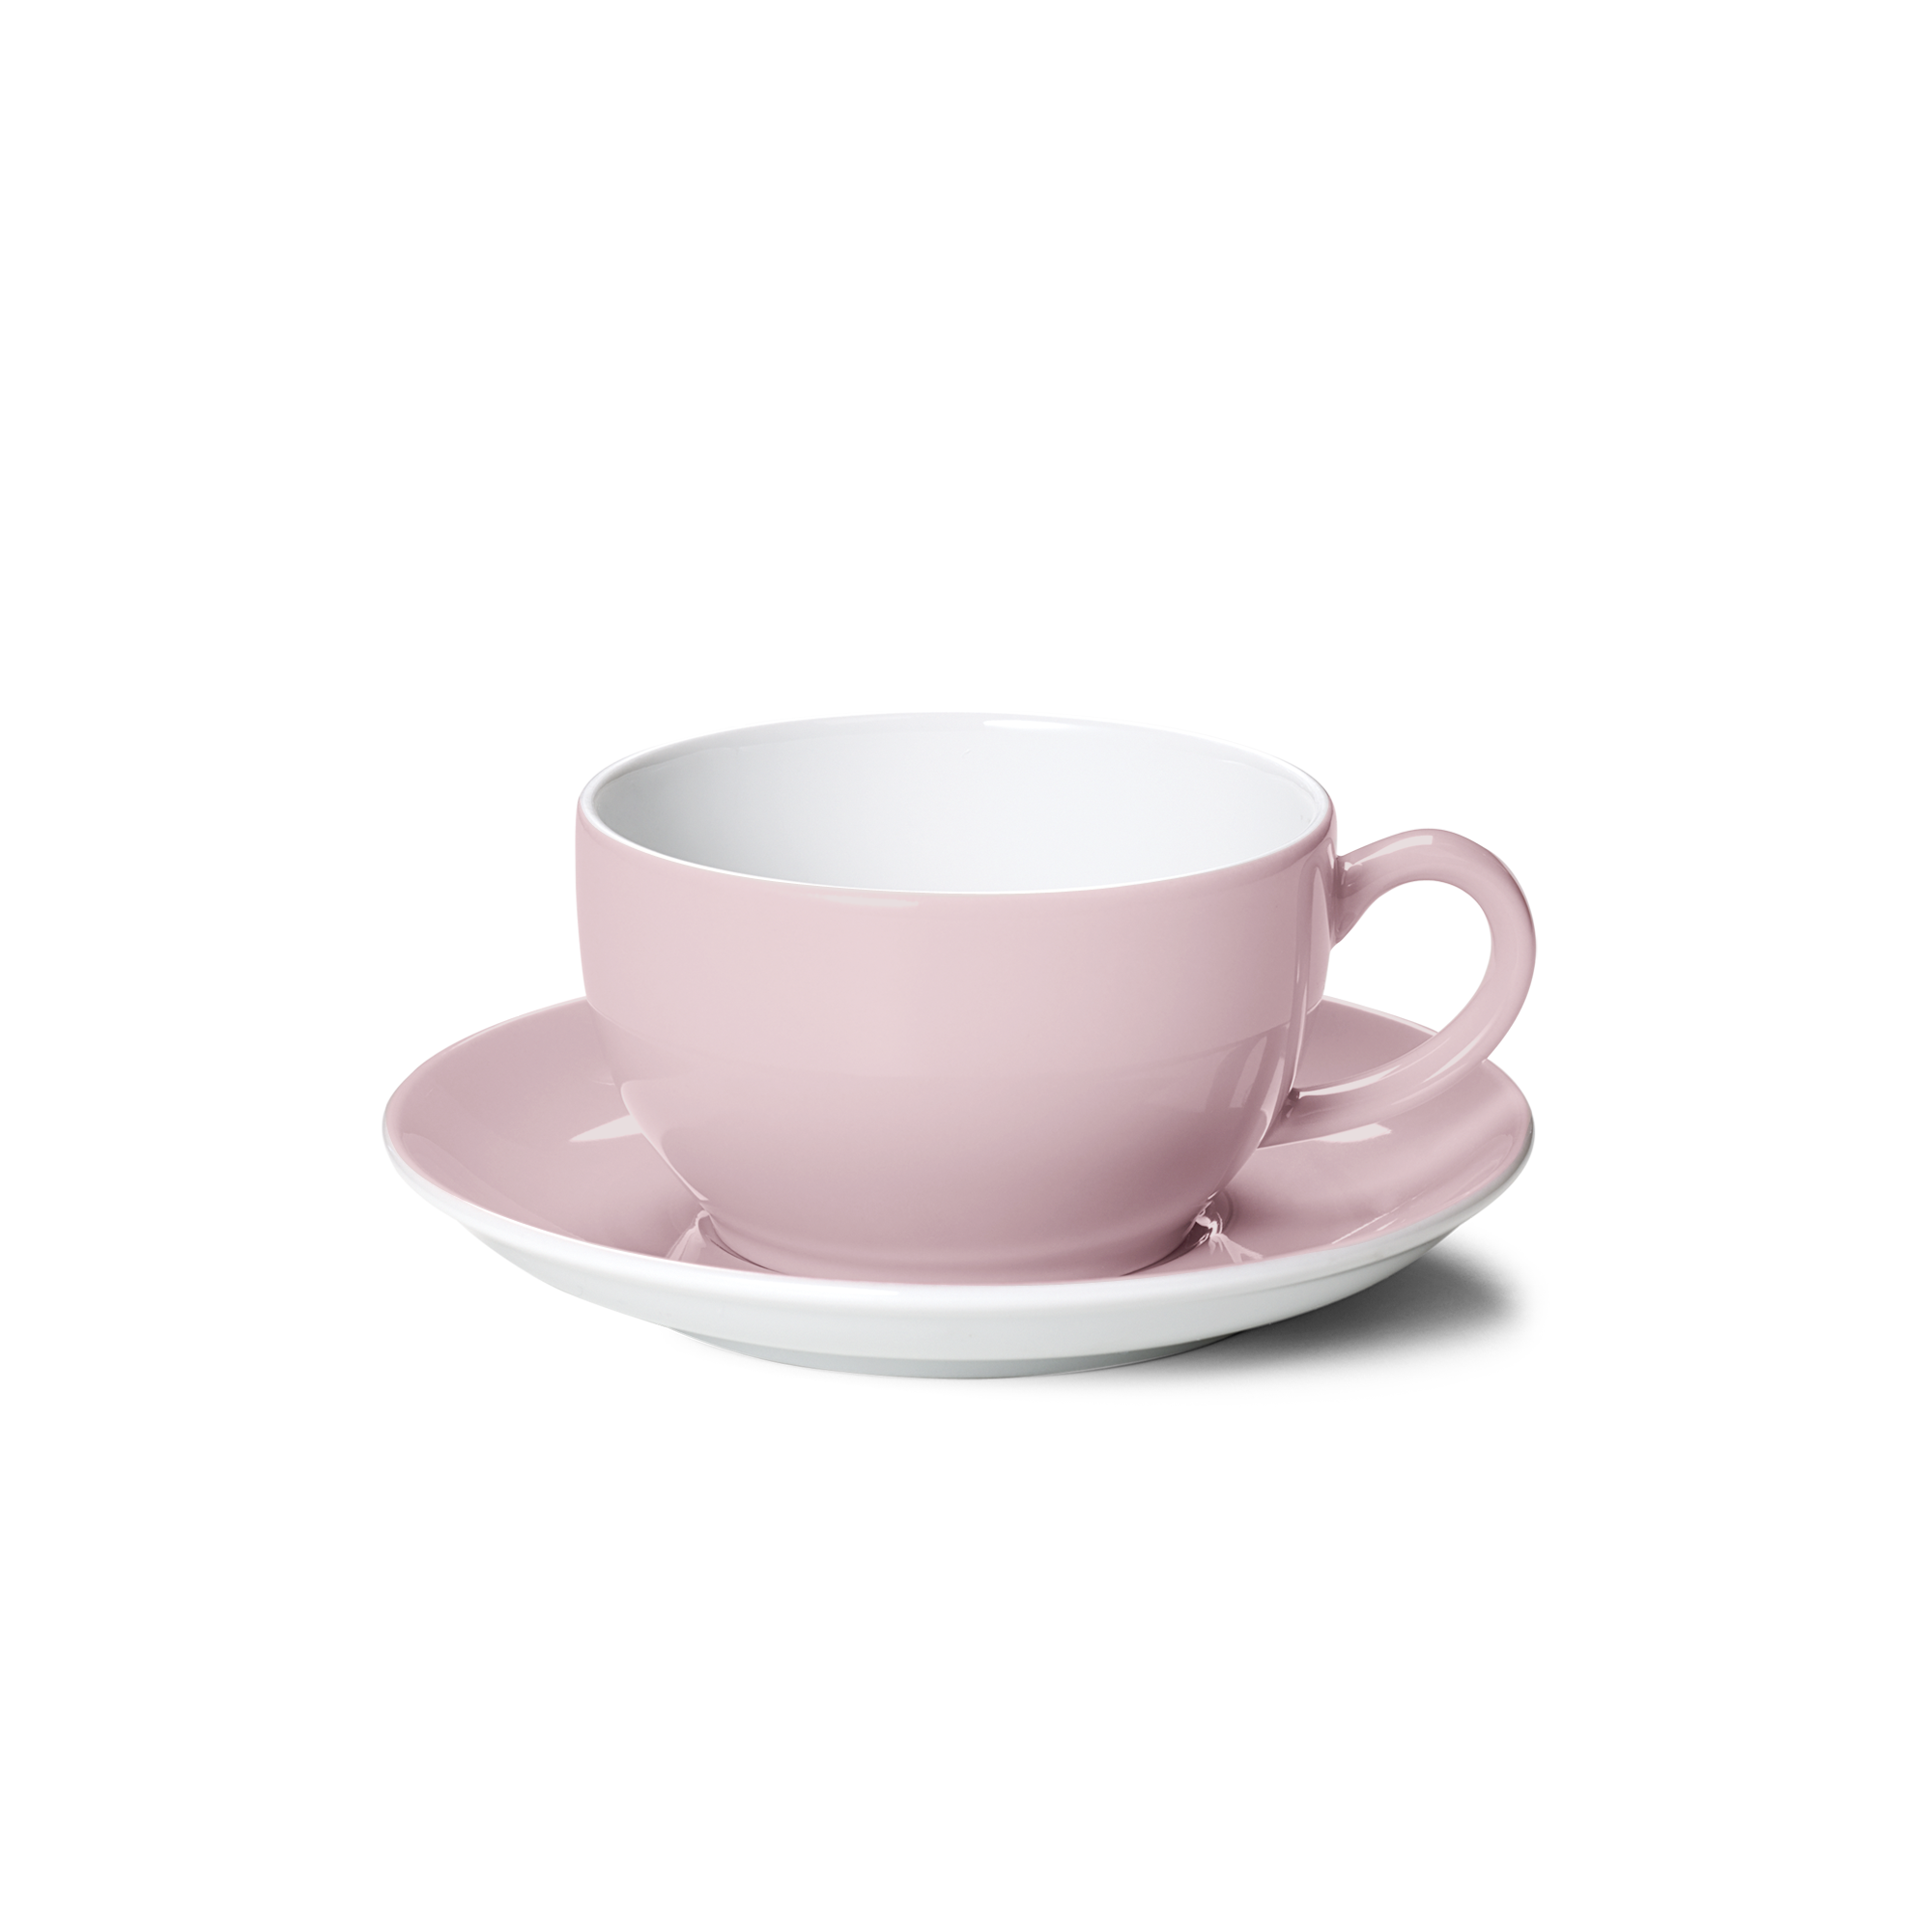 Solid Color coffee mug pale pink